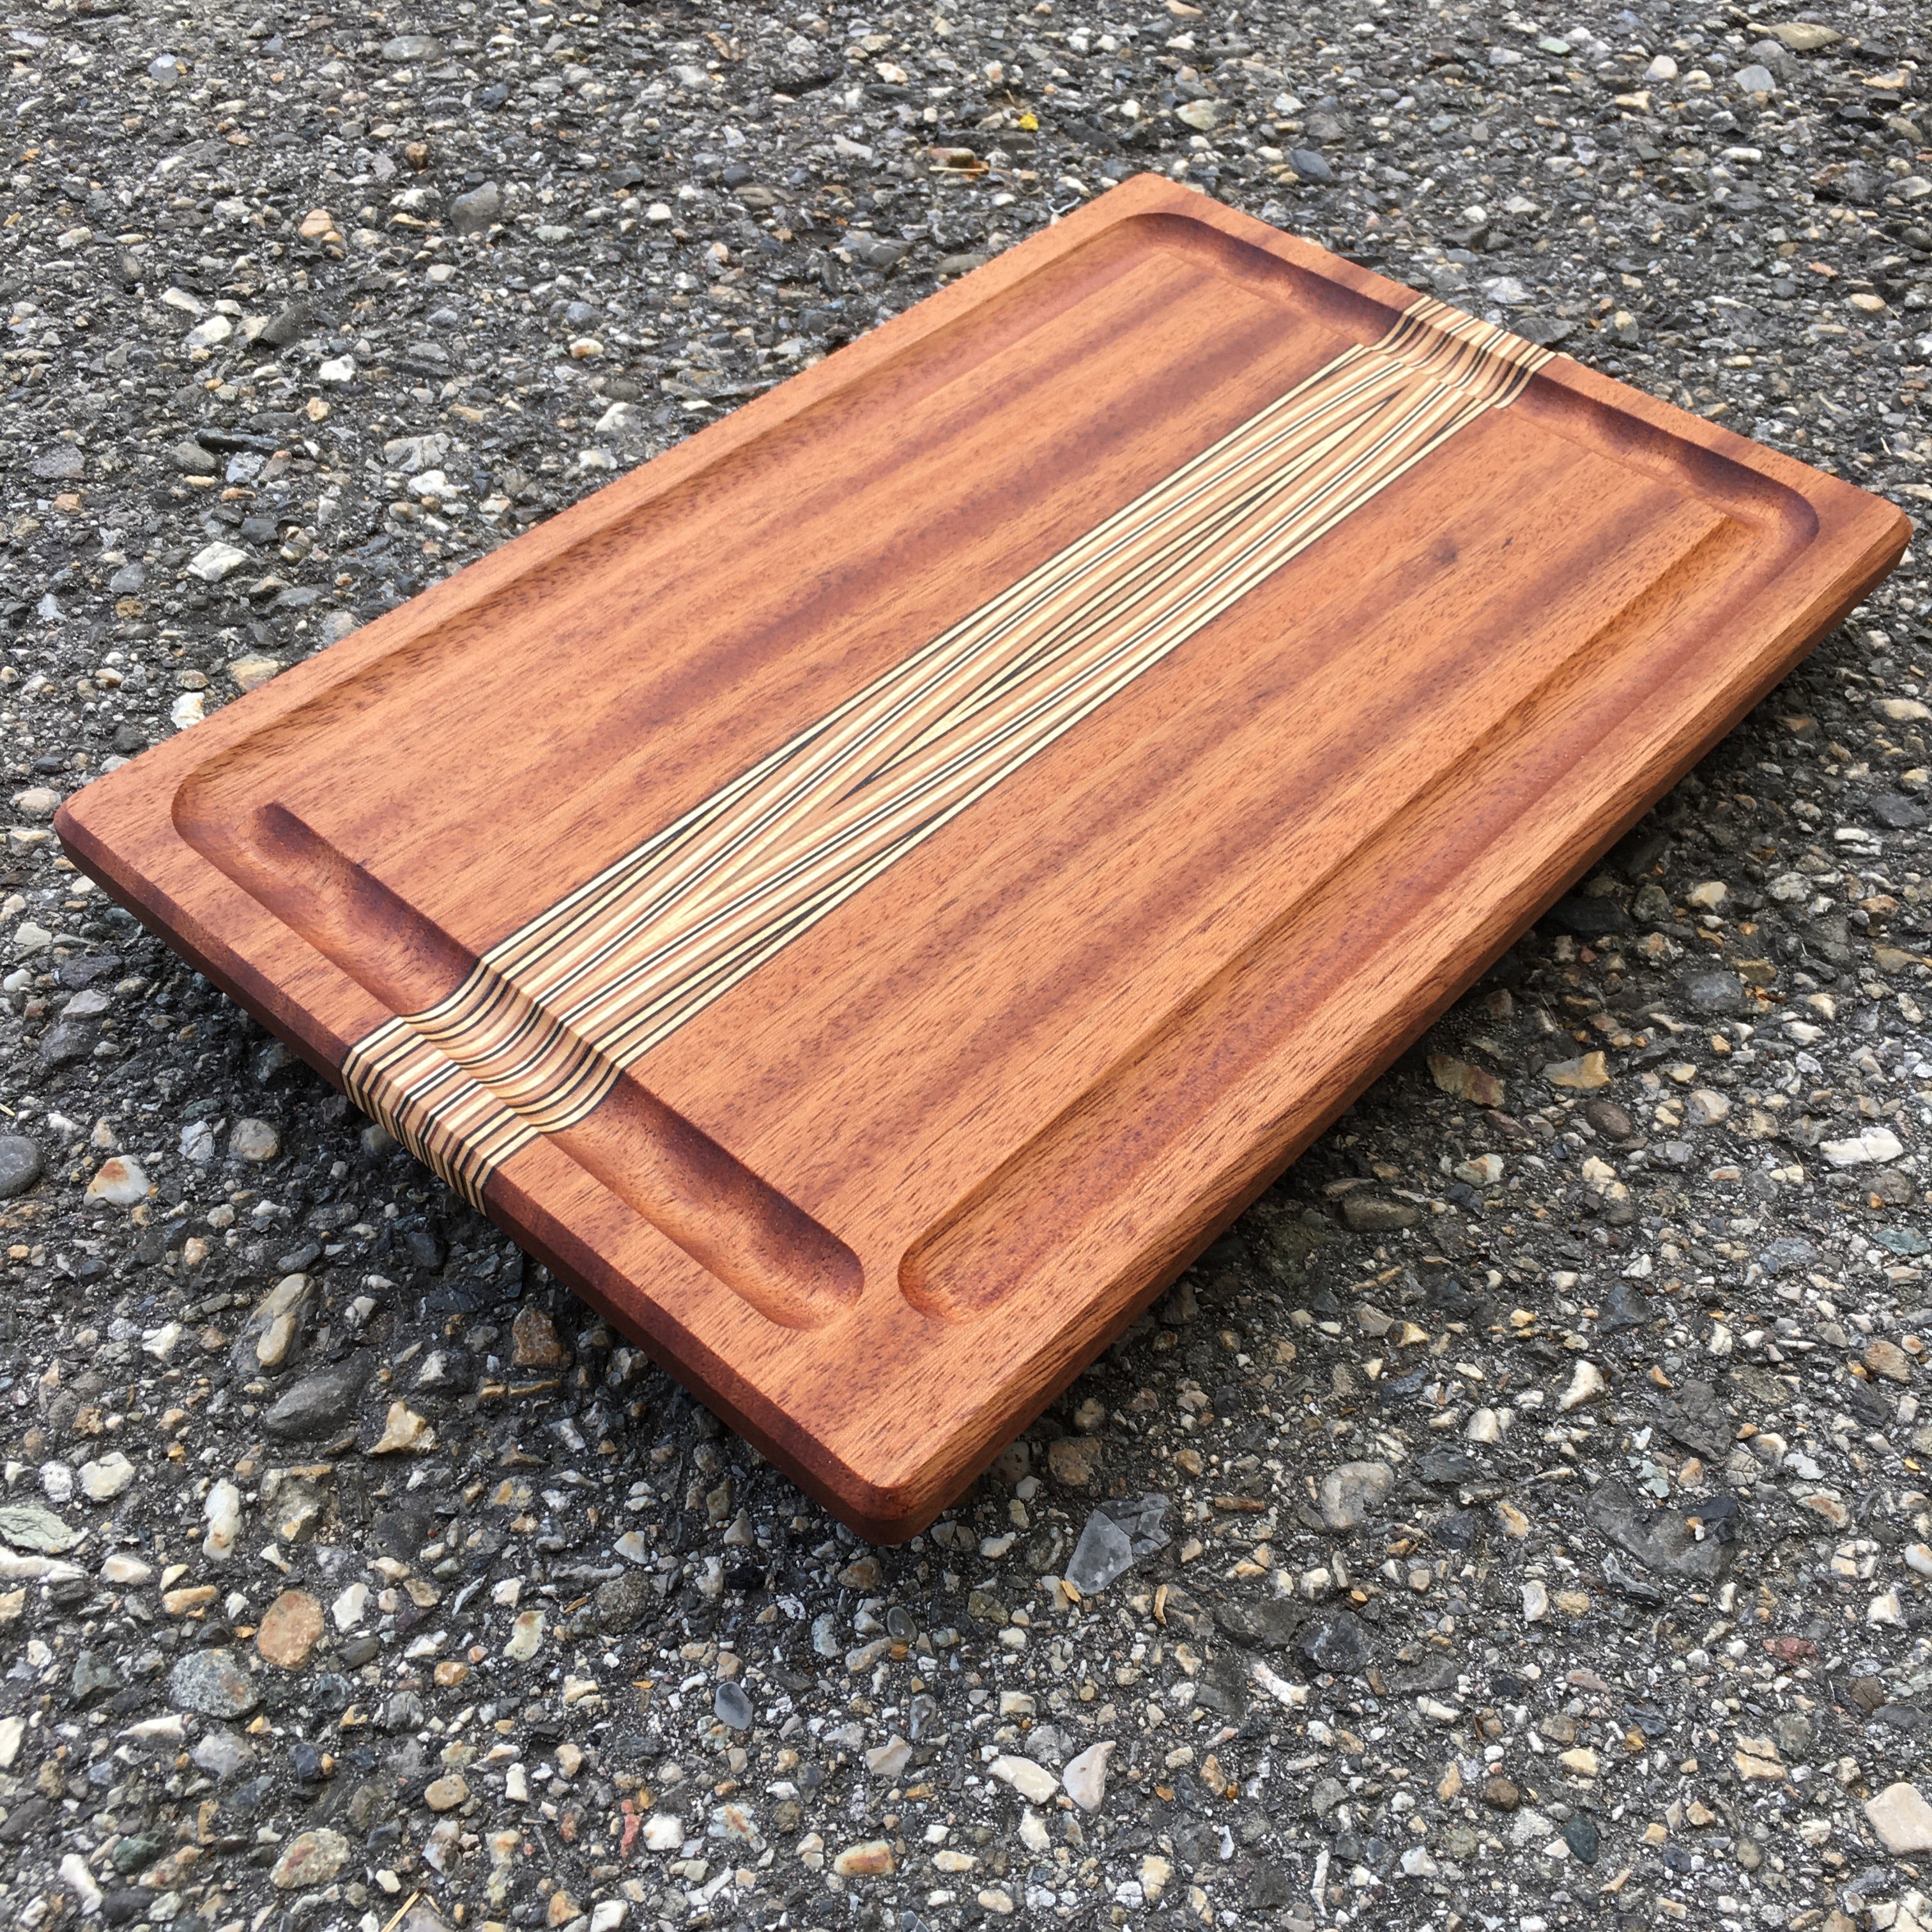 LGS wooden chopping board - small